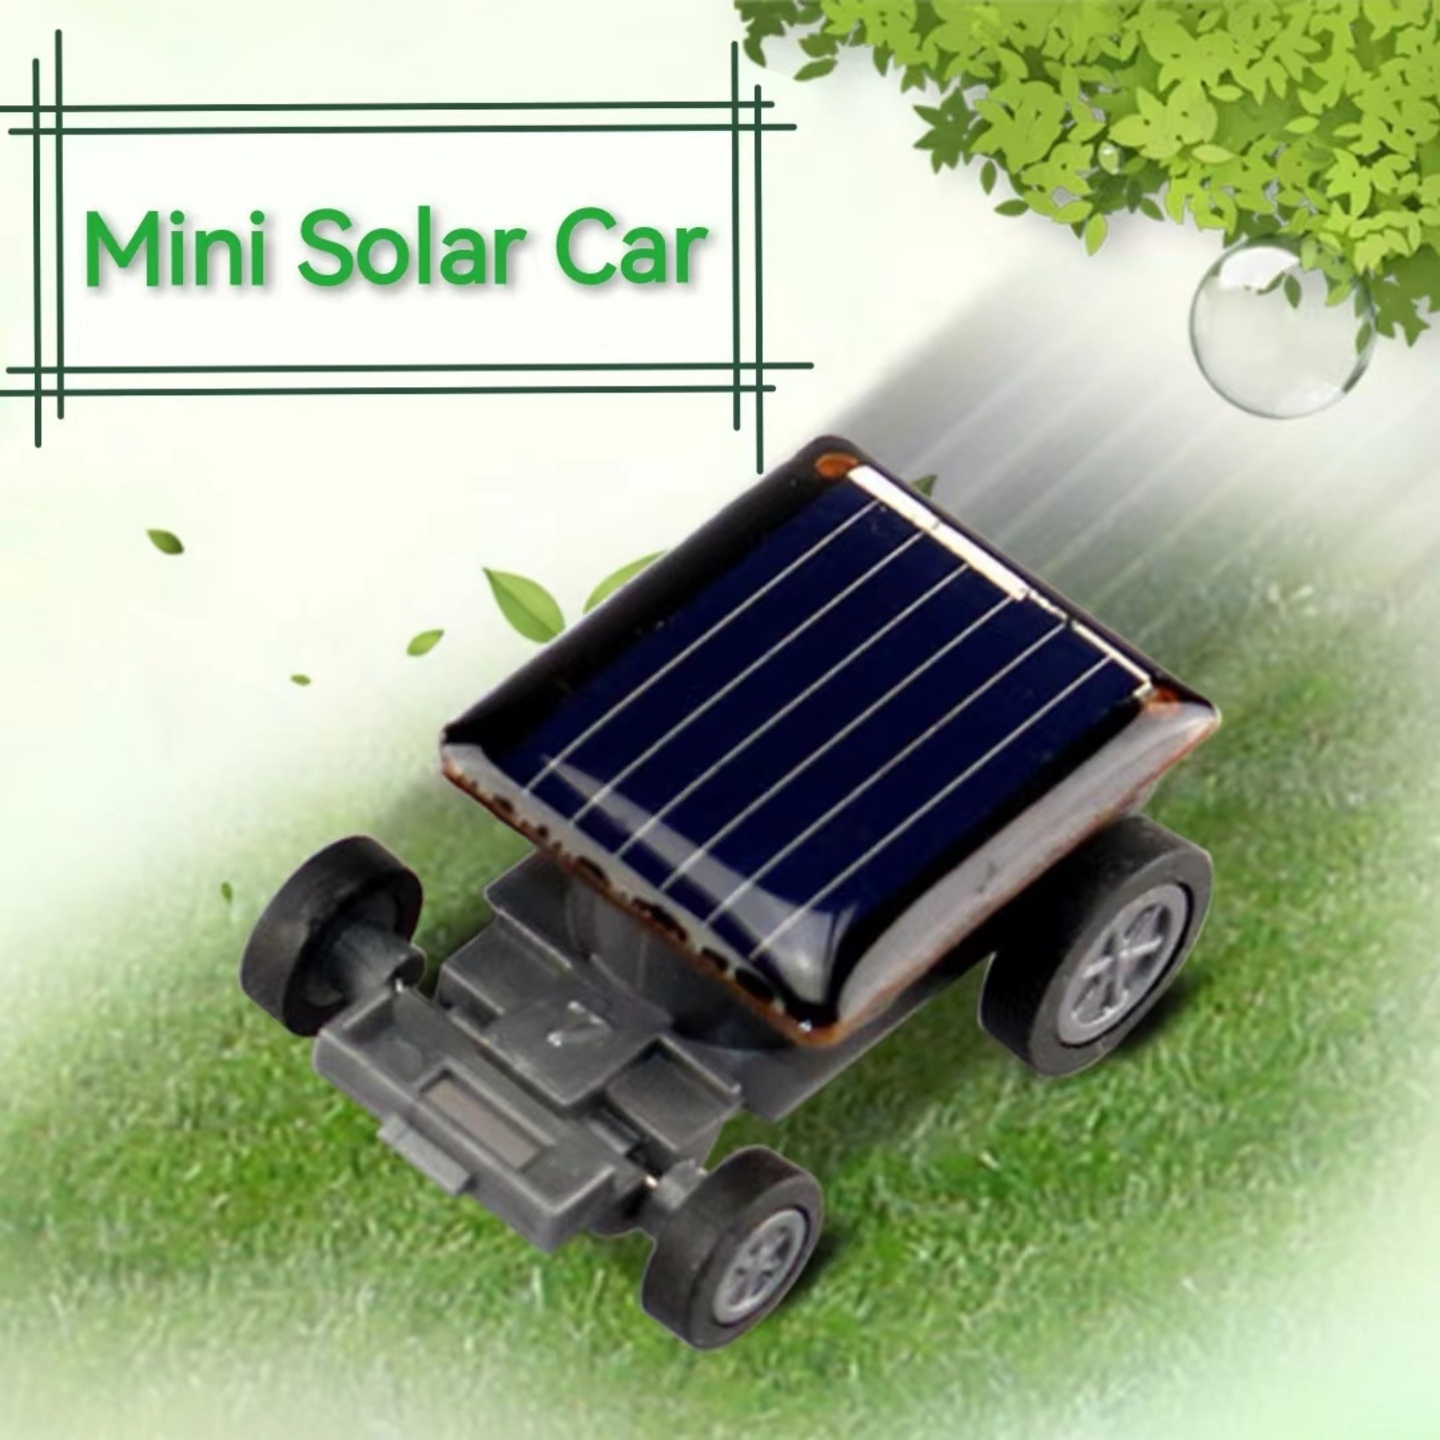 Mini Solar Powered Car Toy for Kids